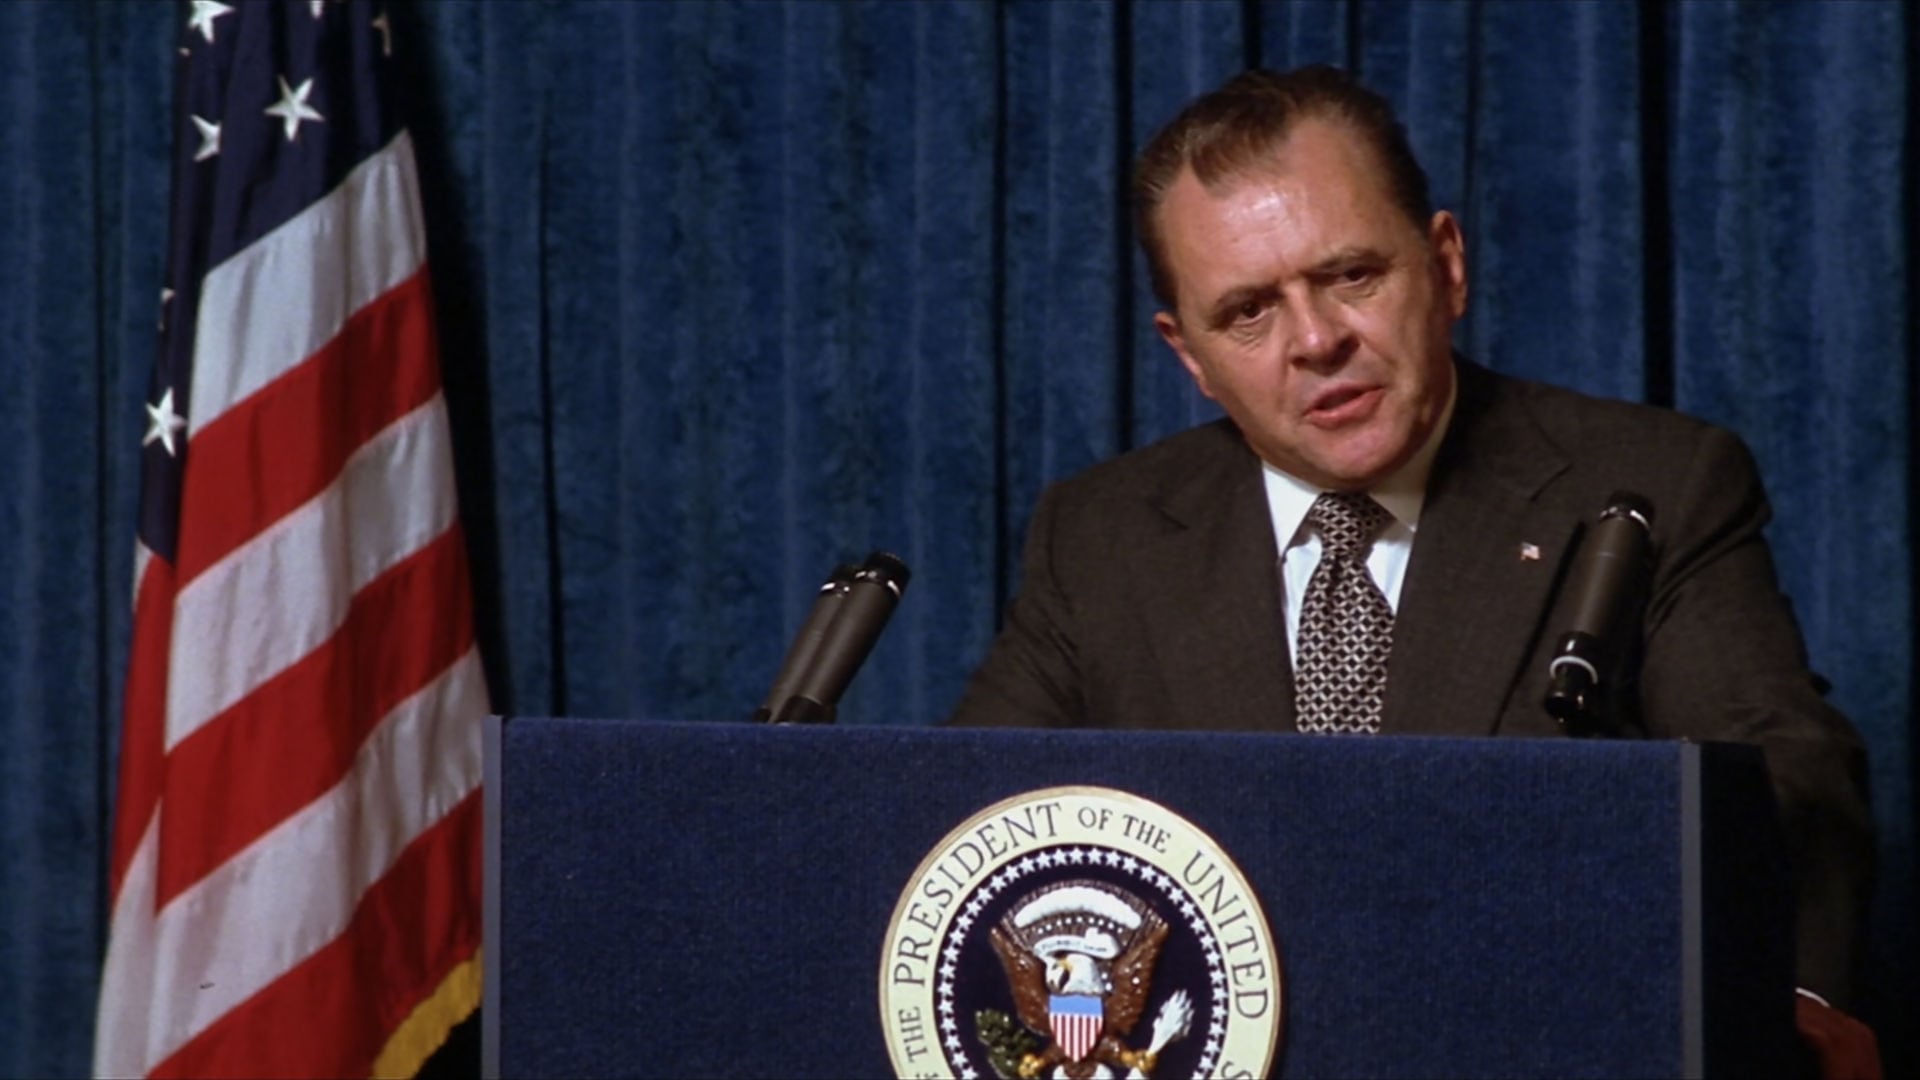 Nixon 1995 123movies